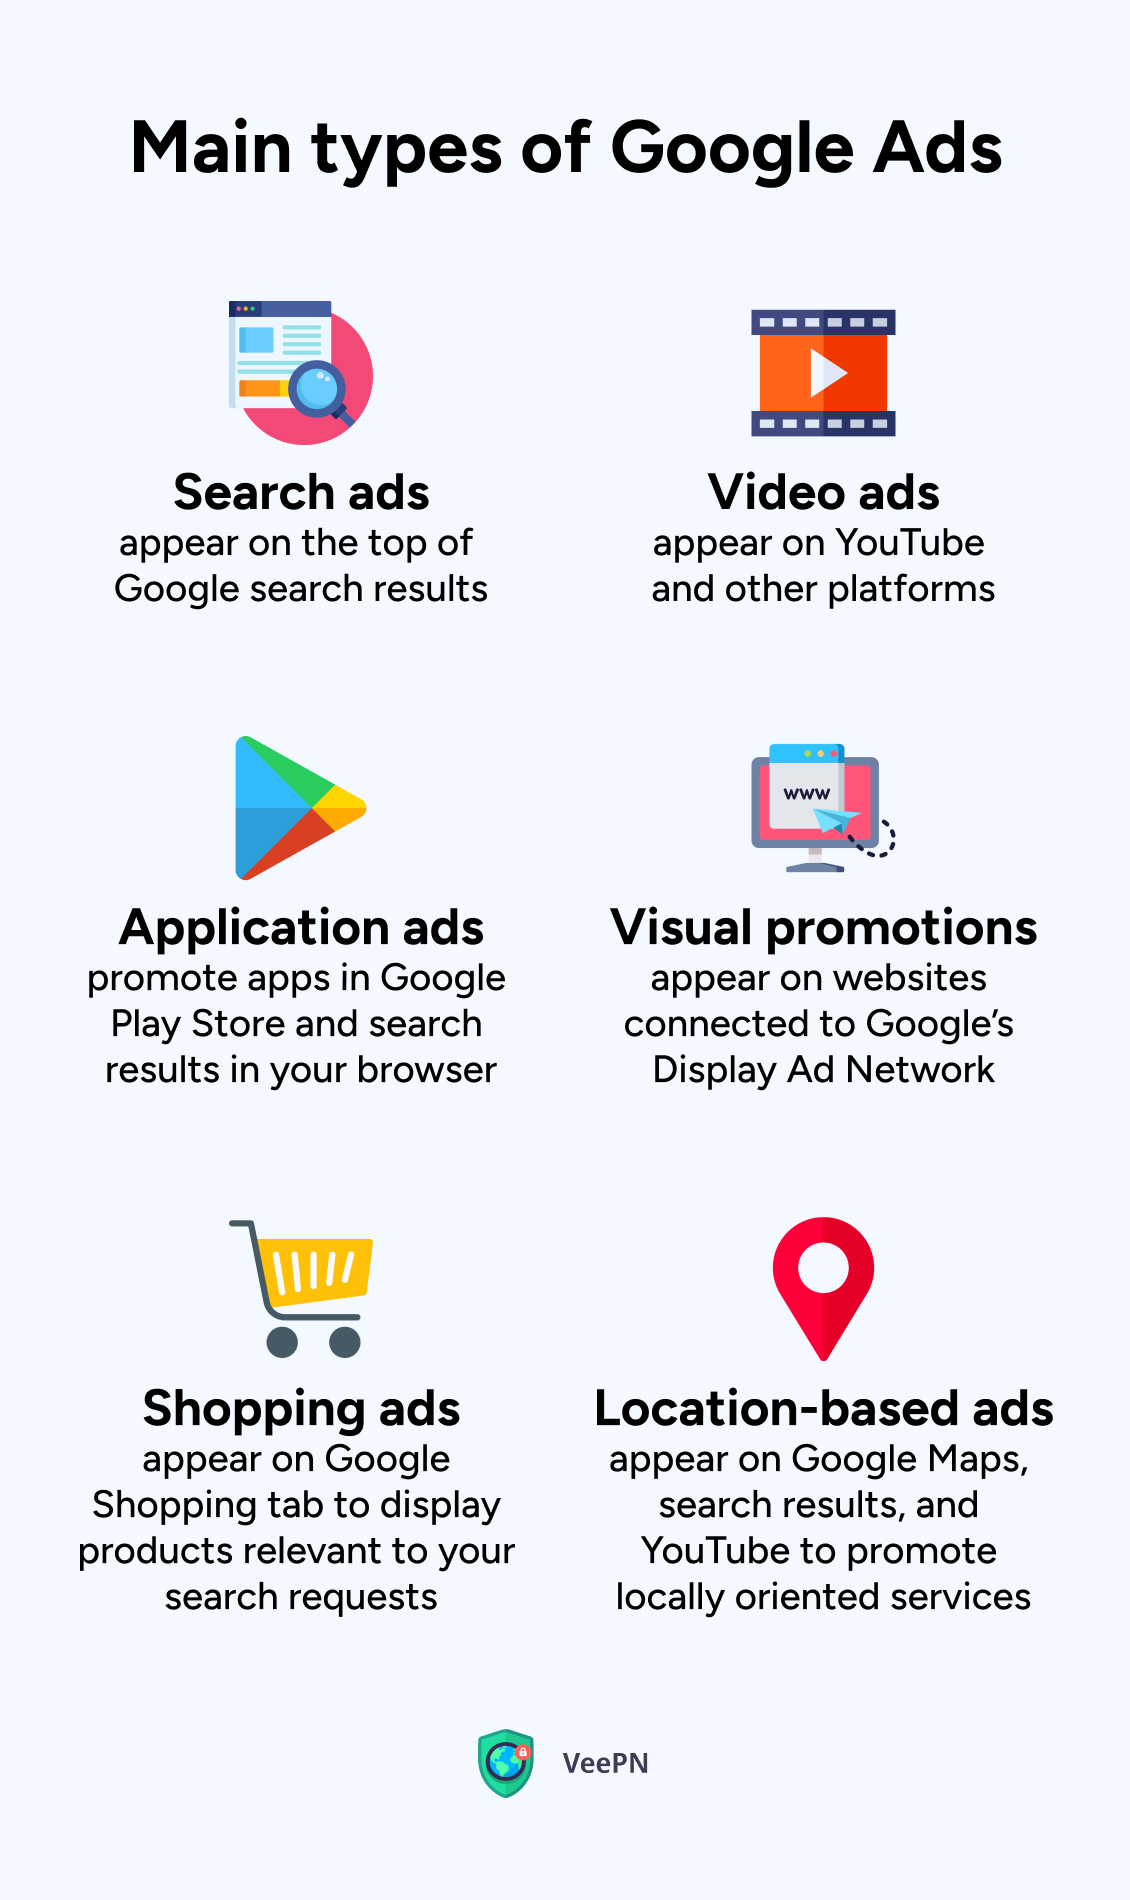 Main types of Google ads